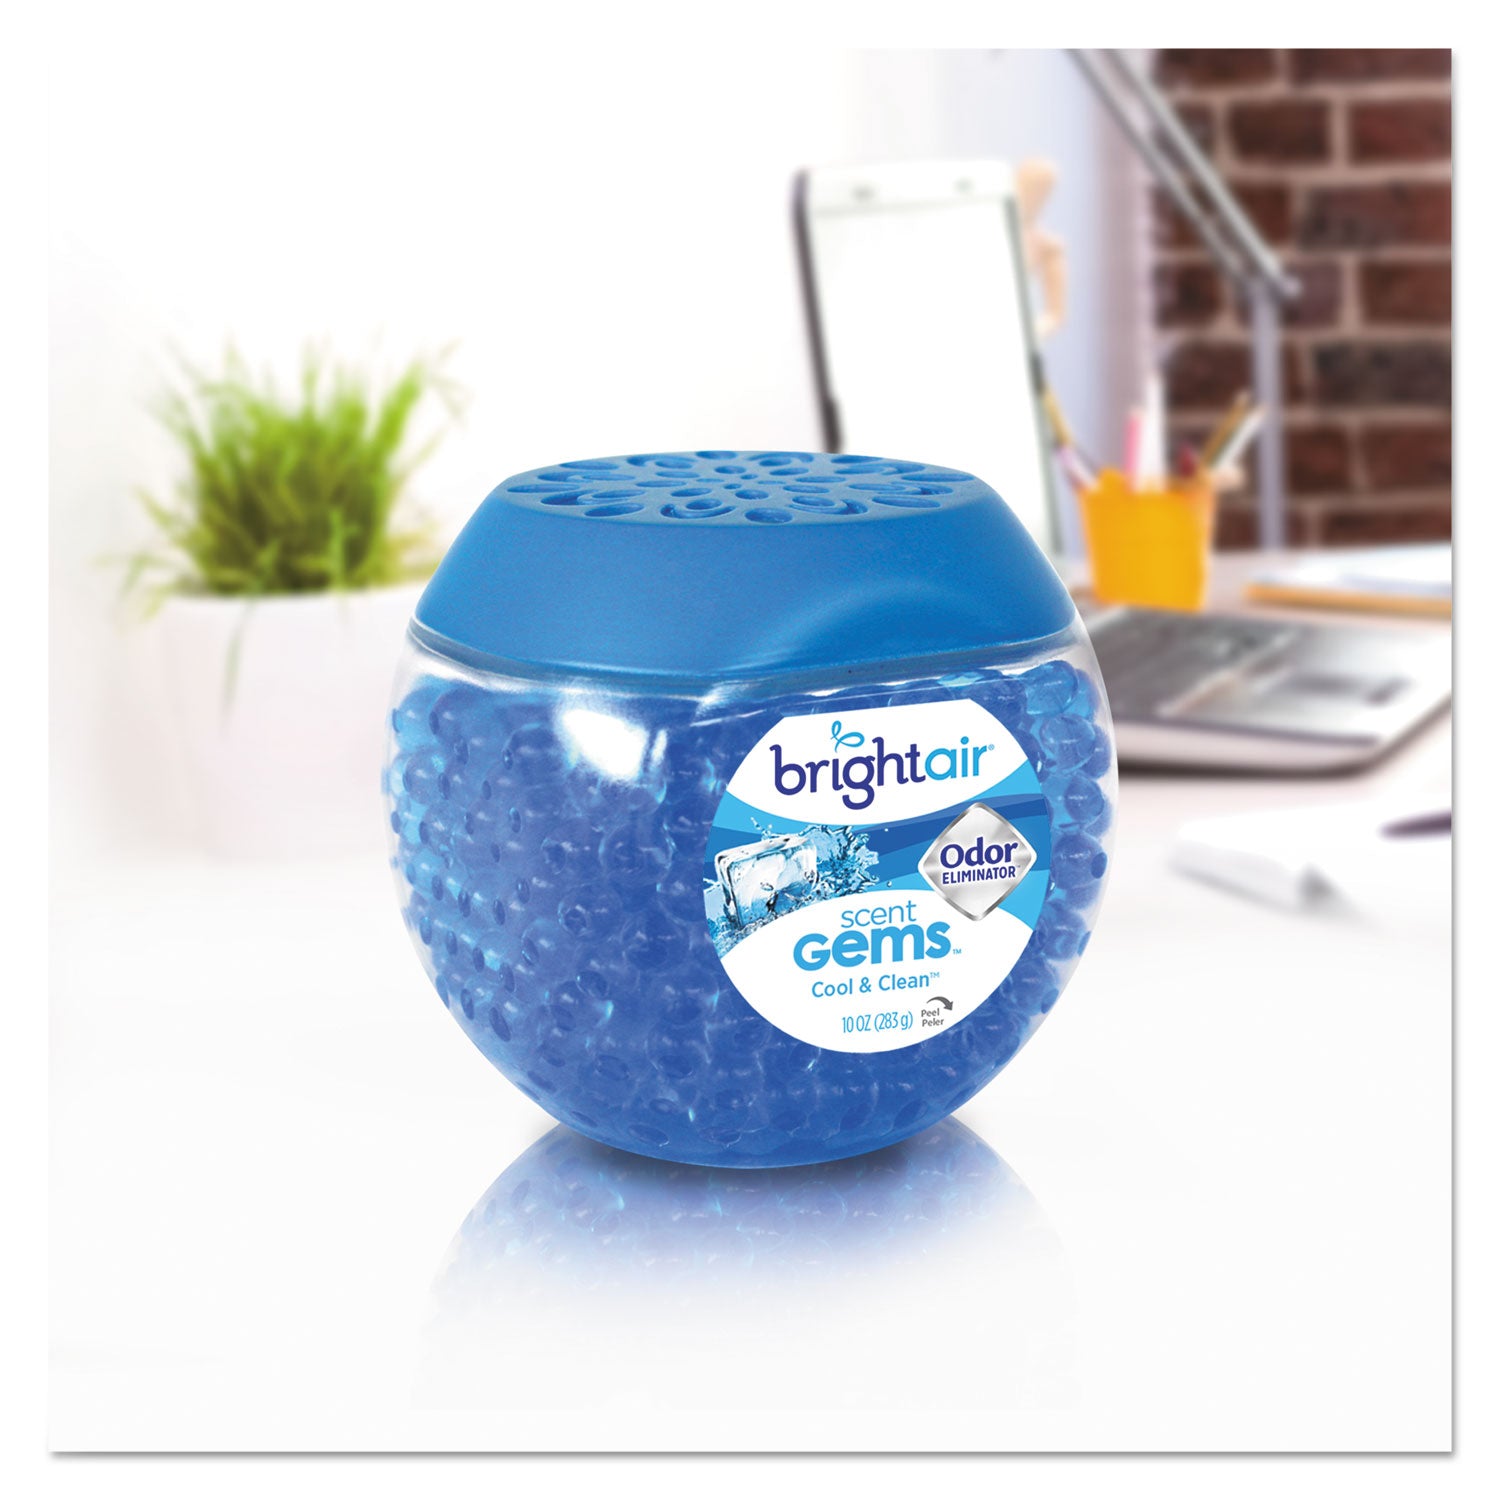 scent-gems-odor-eliminator-cool-and-clean-blue-10-oz-jar-6-carton_bri900228ct - 5